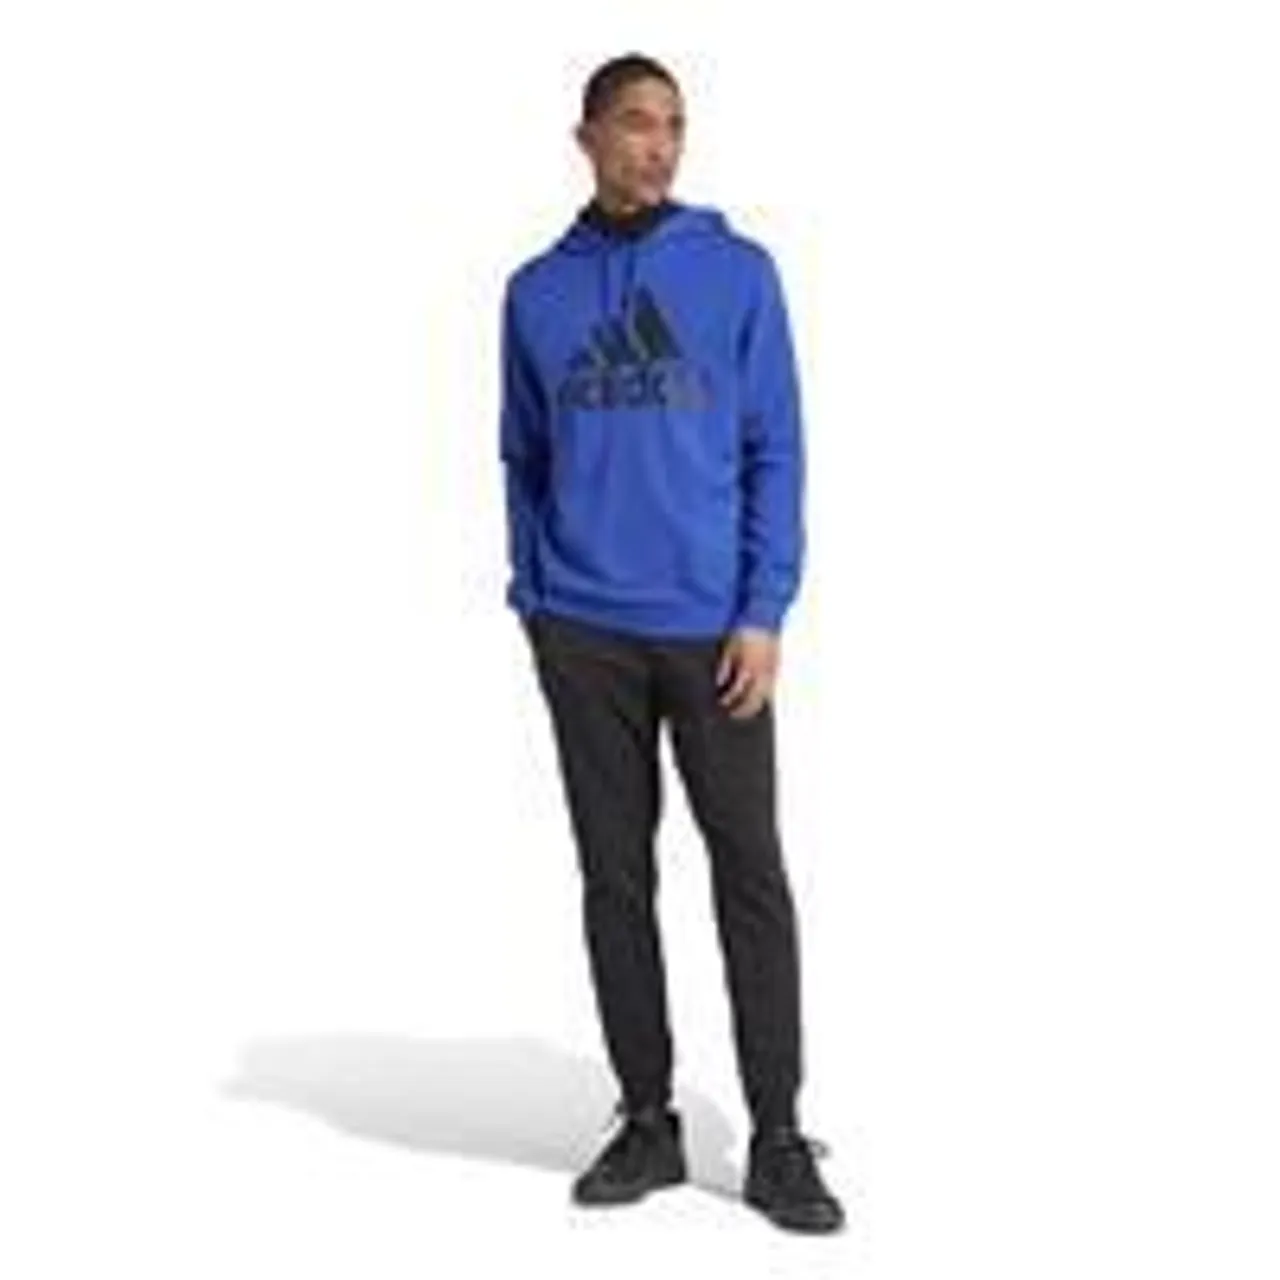 Adidas Trainingsanzug Herren - blau/schwarz